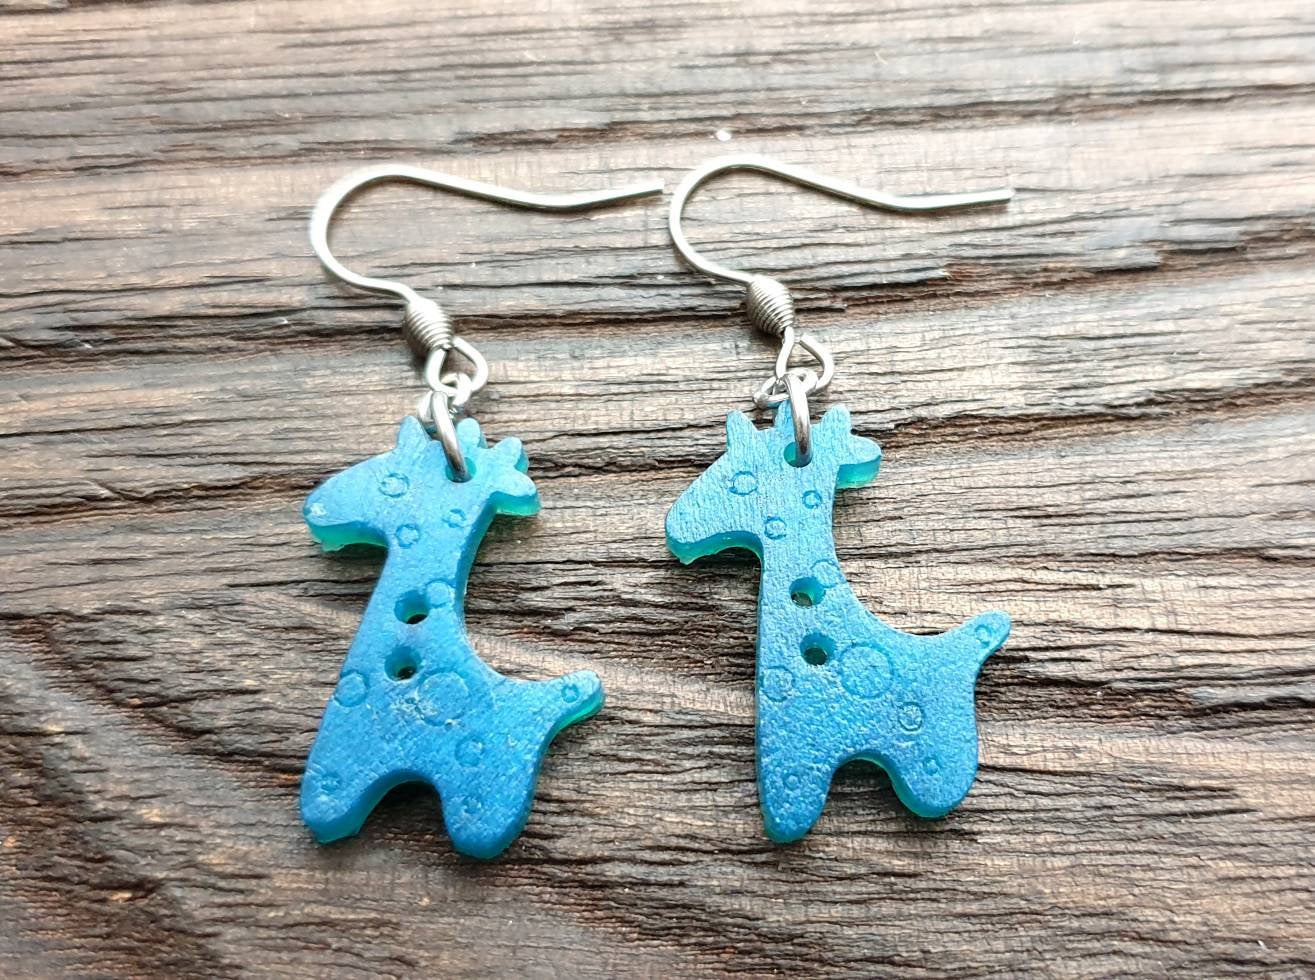 Giraffe Dangle Earrings, Mix Blue Resin Stainless Steel Earrings.